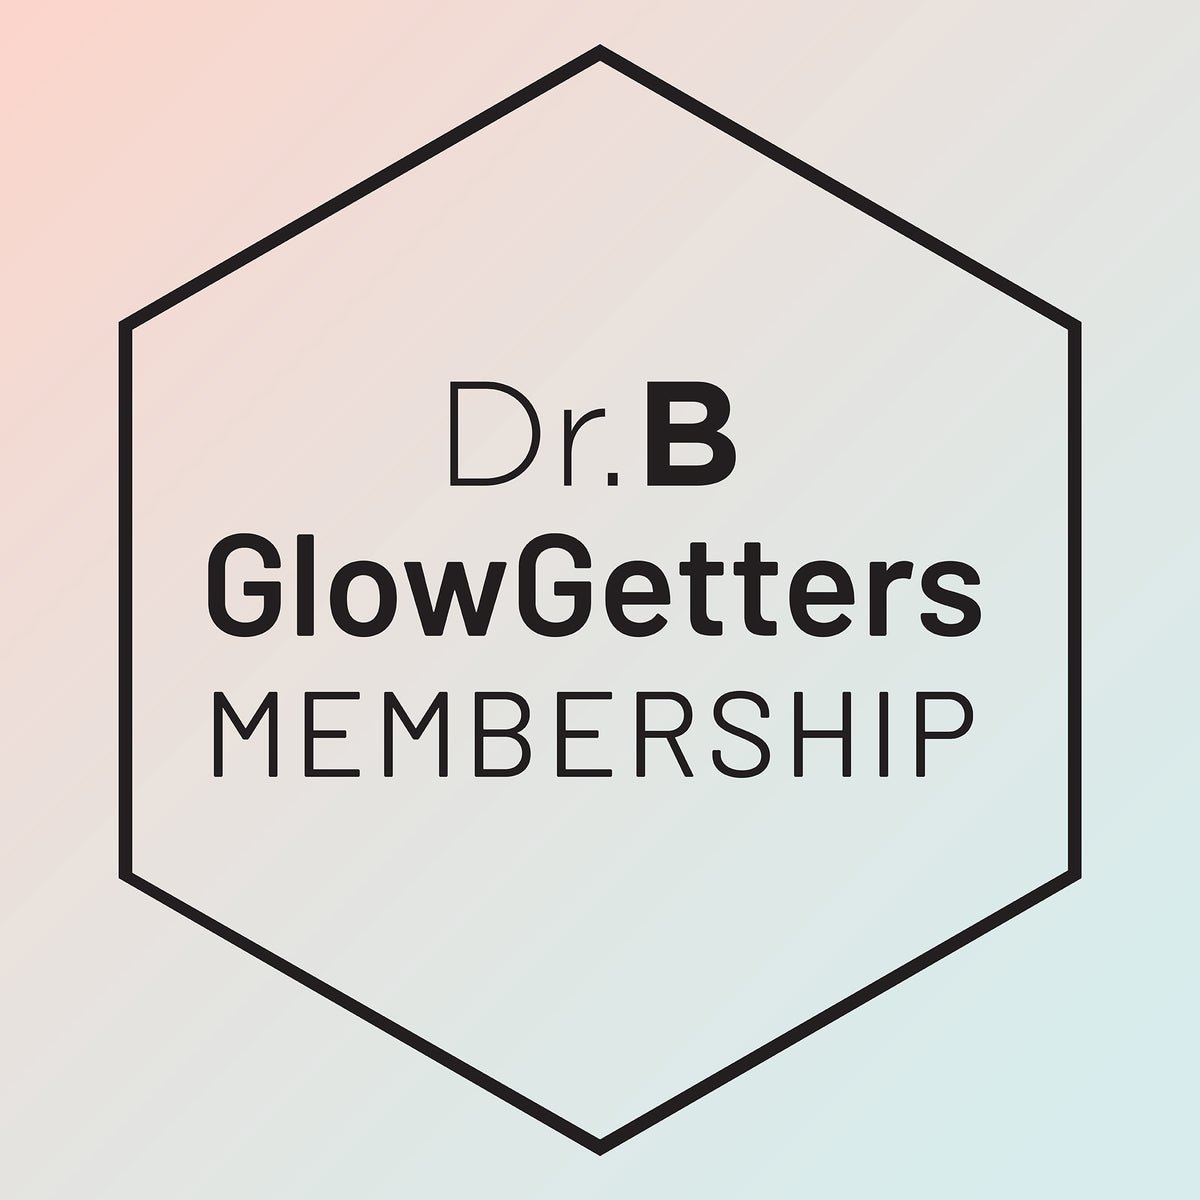 The Dr. B GlowGetters Memberships